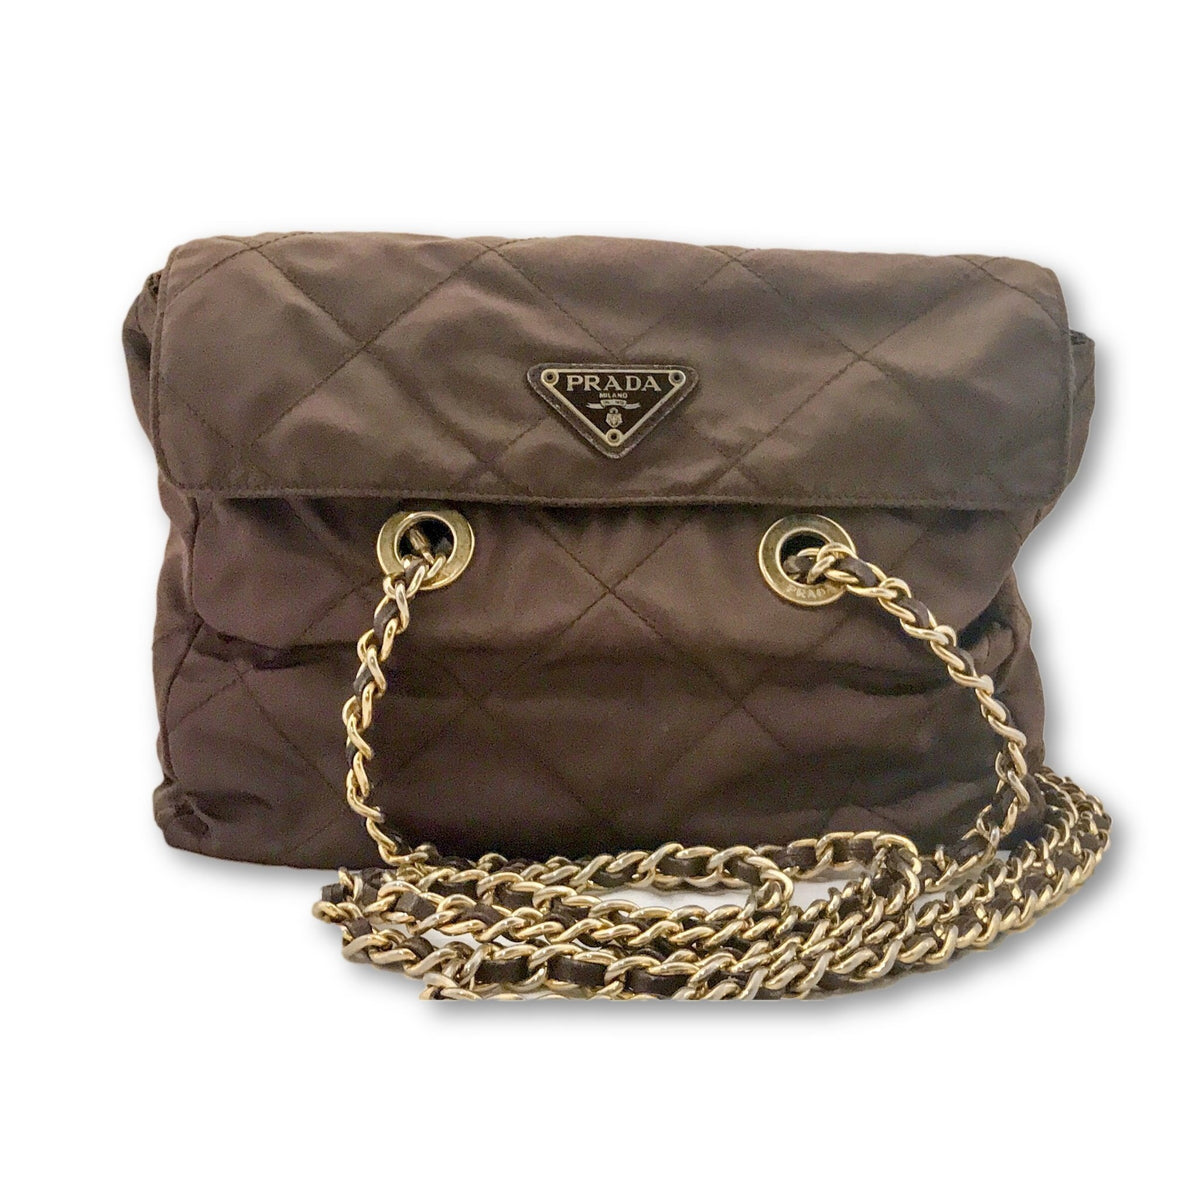 Shop authentic Prada Tessuto Handle Bag at revogue for just USD 129.00